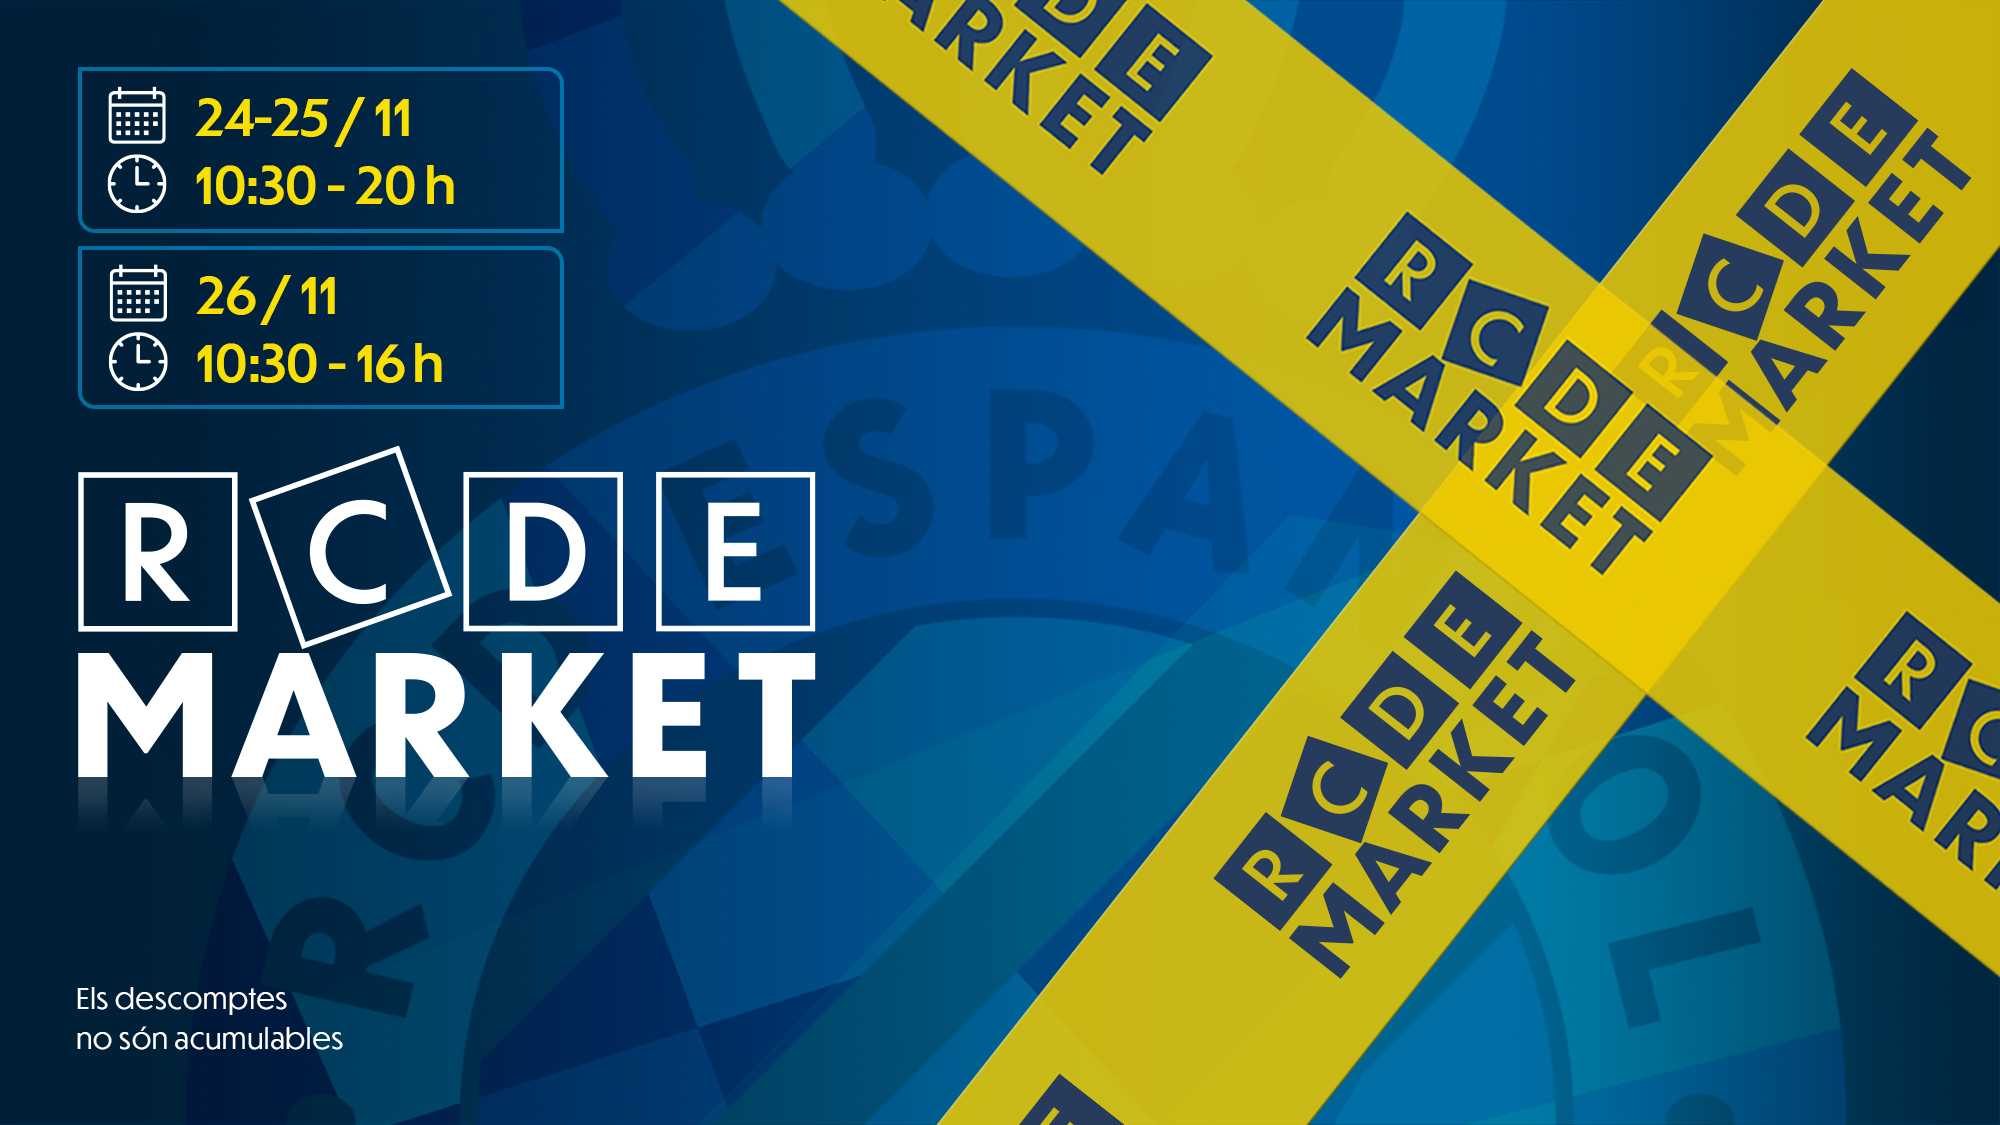 Arriba el Black Friday, arriba l’RCDE Market